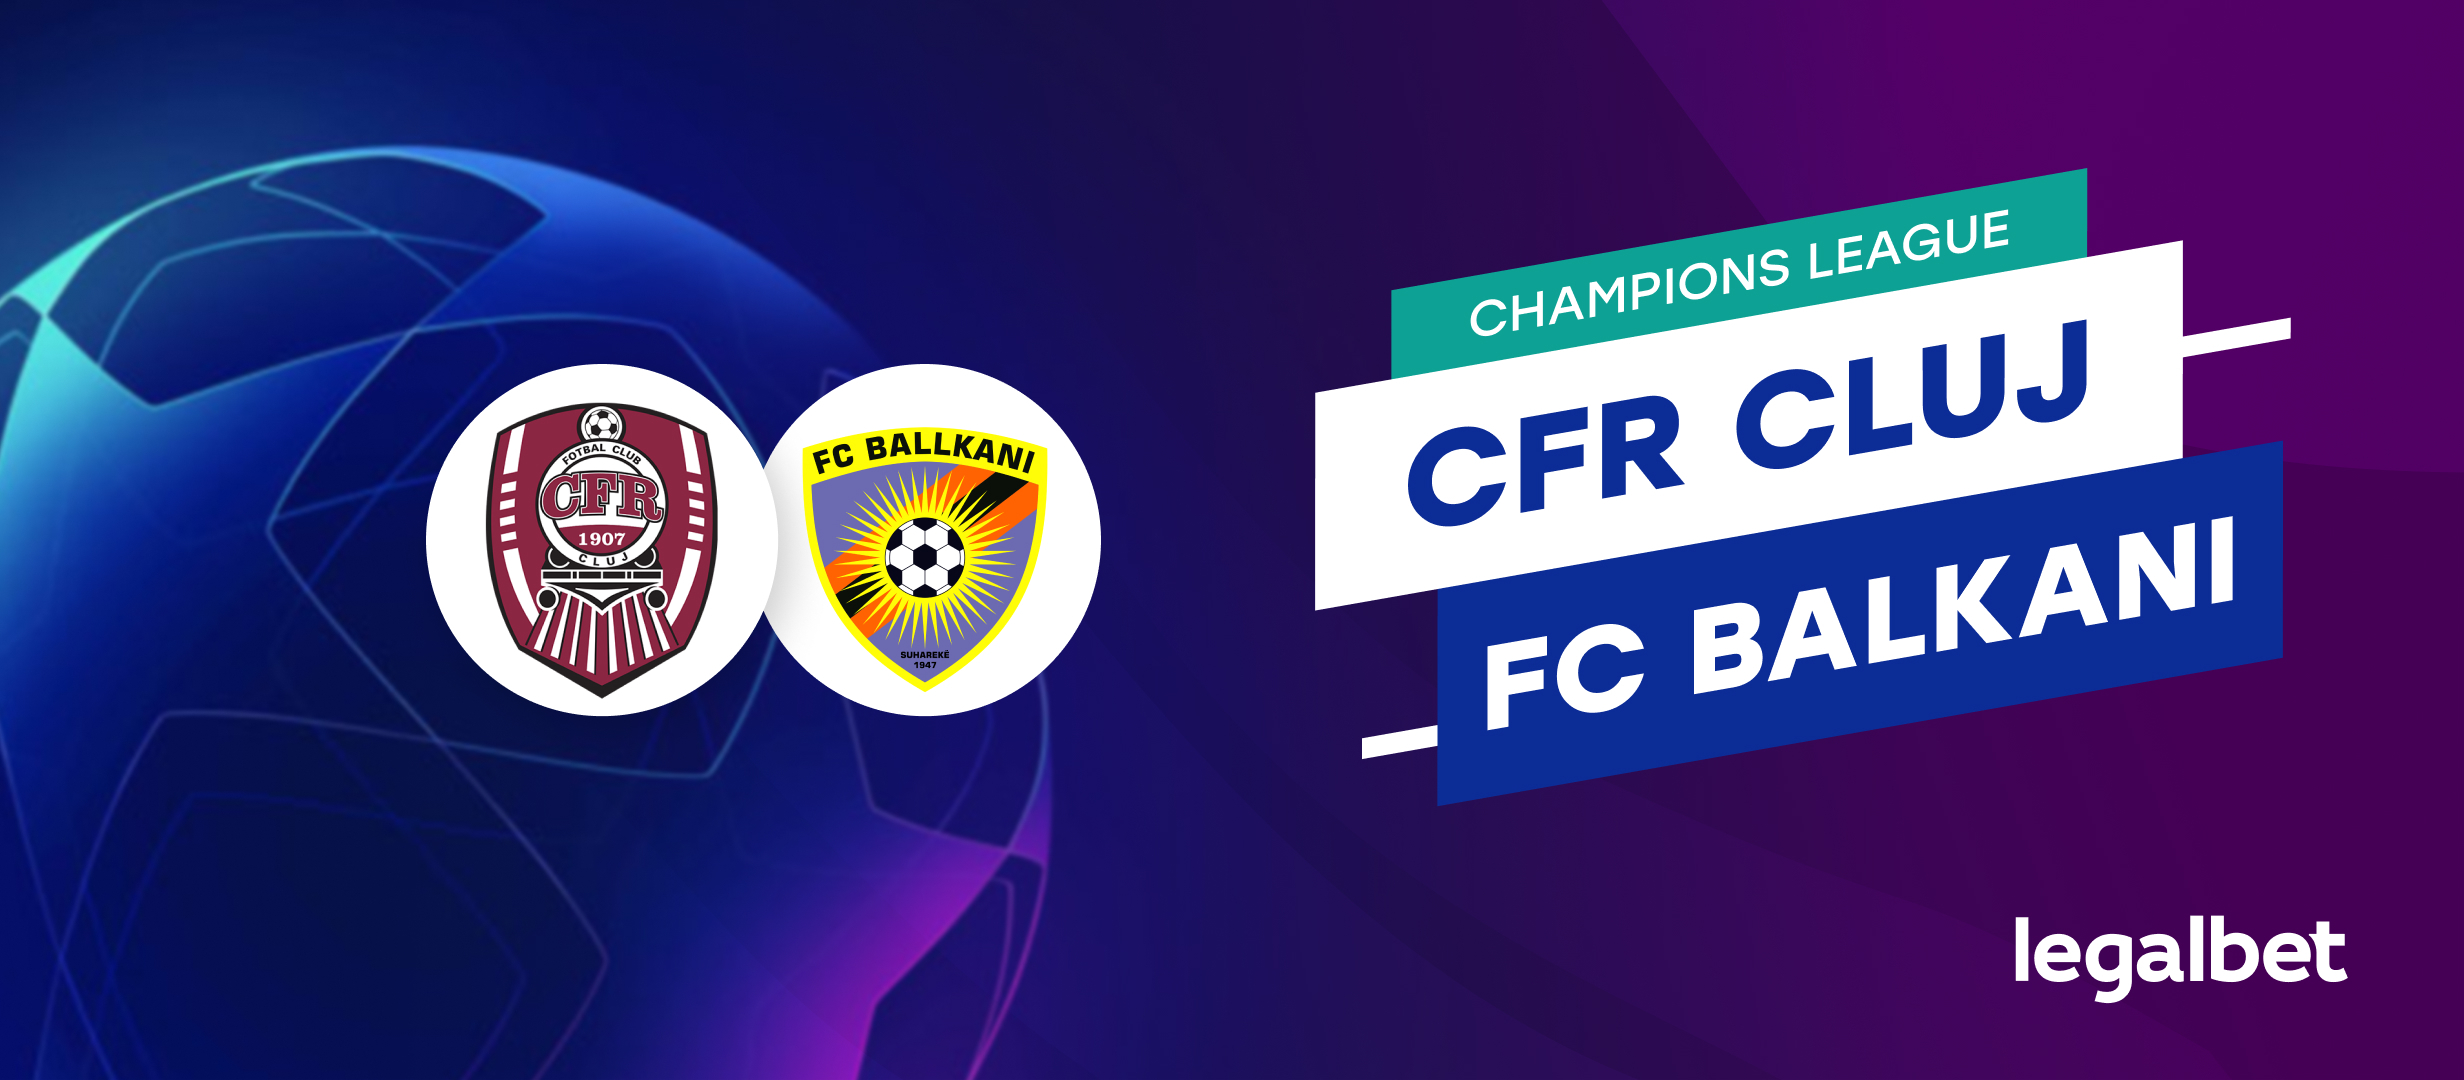 CFR Cluj - KF Ballkani: cote la pariuri si statistici